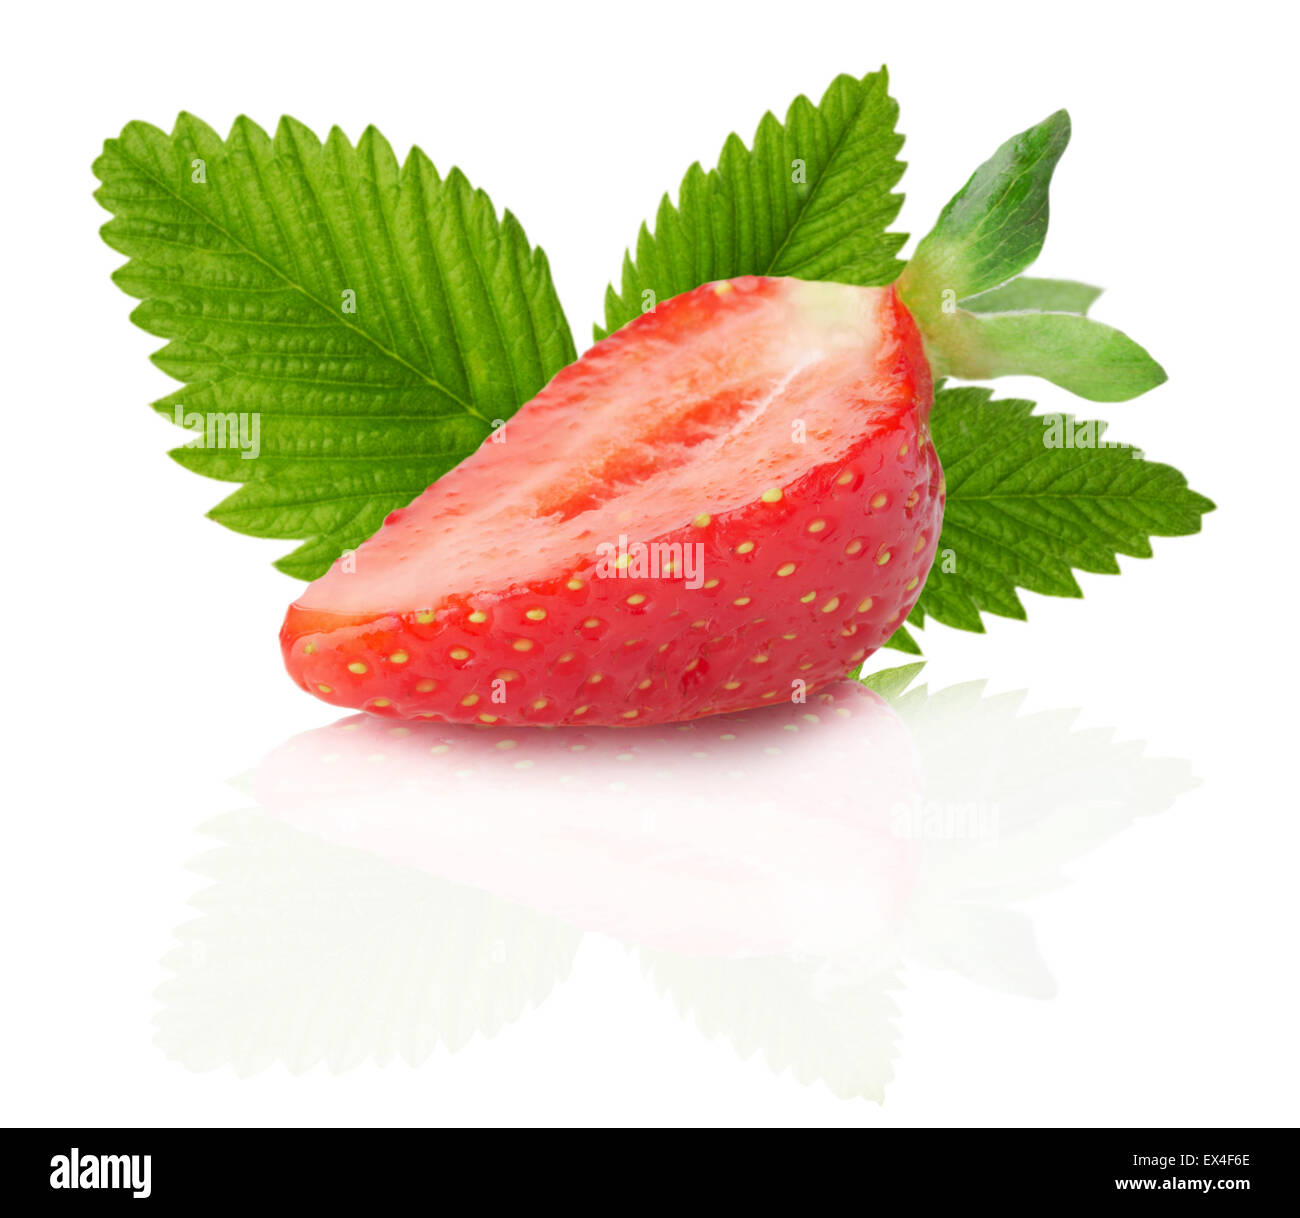 juicy strawberry on the white background. Stock Photo